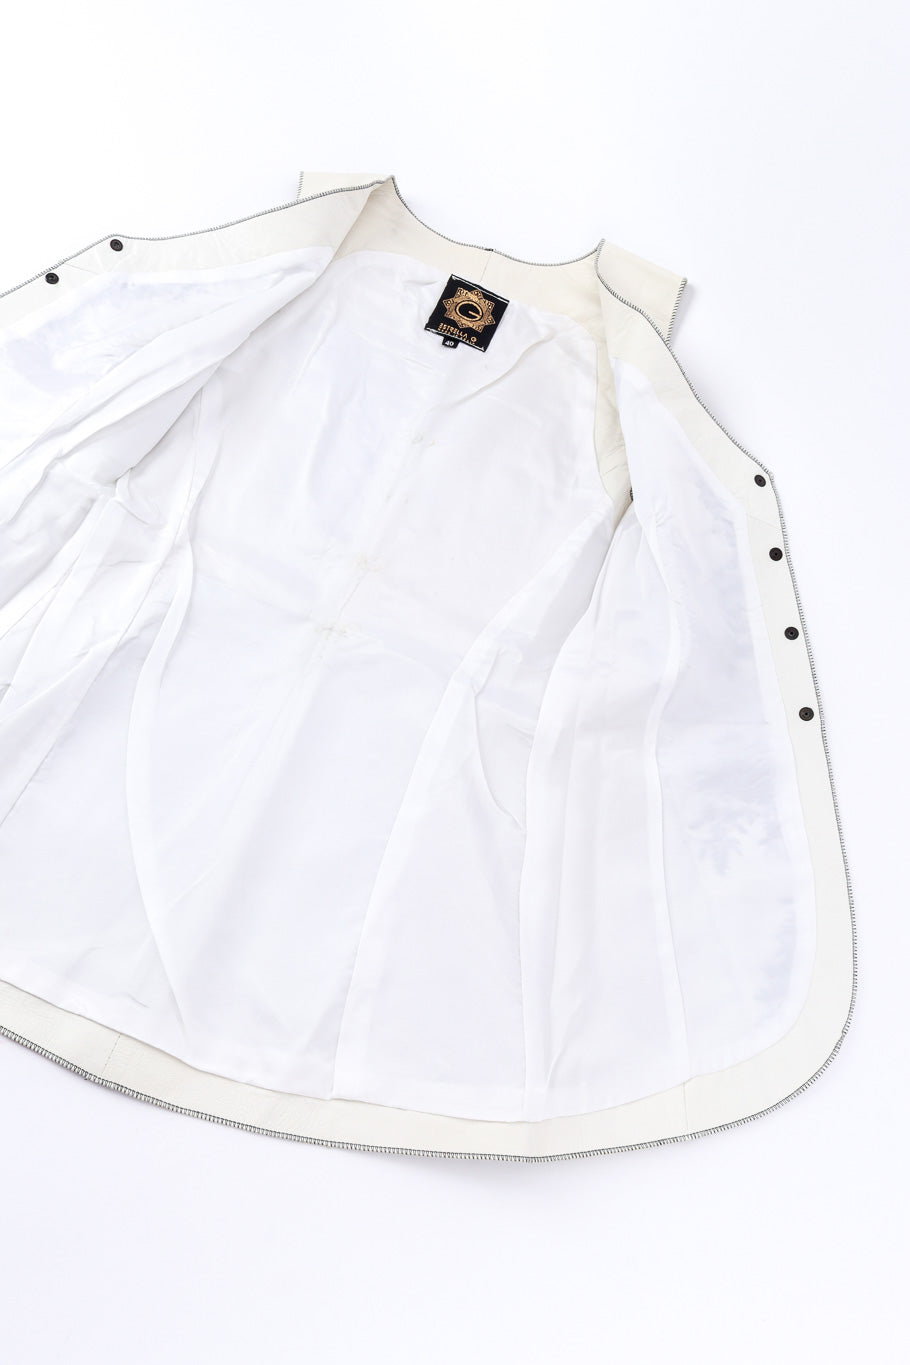 Vintage Estrella G Embroidered Leather Vest and Pant Set view of vest lining @Recessla